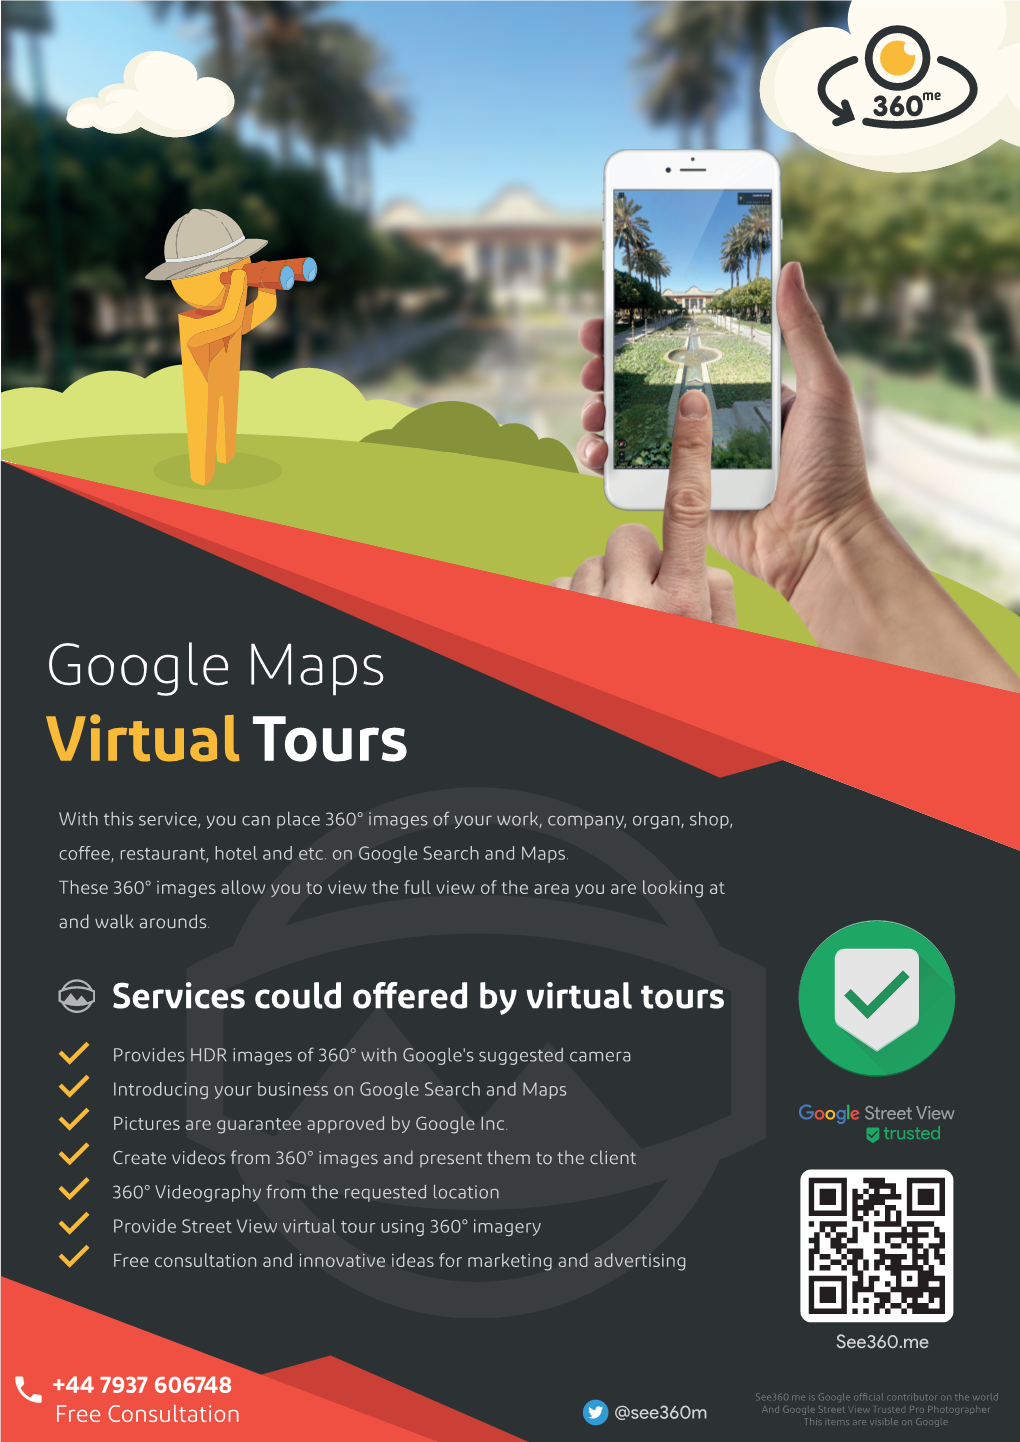 Virtualtours